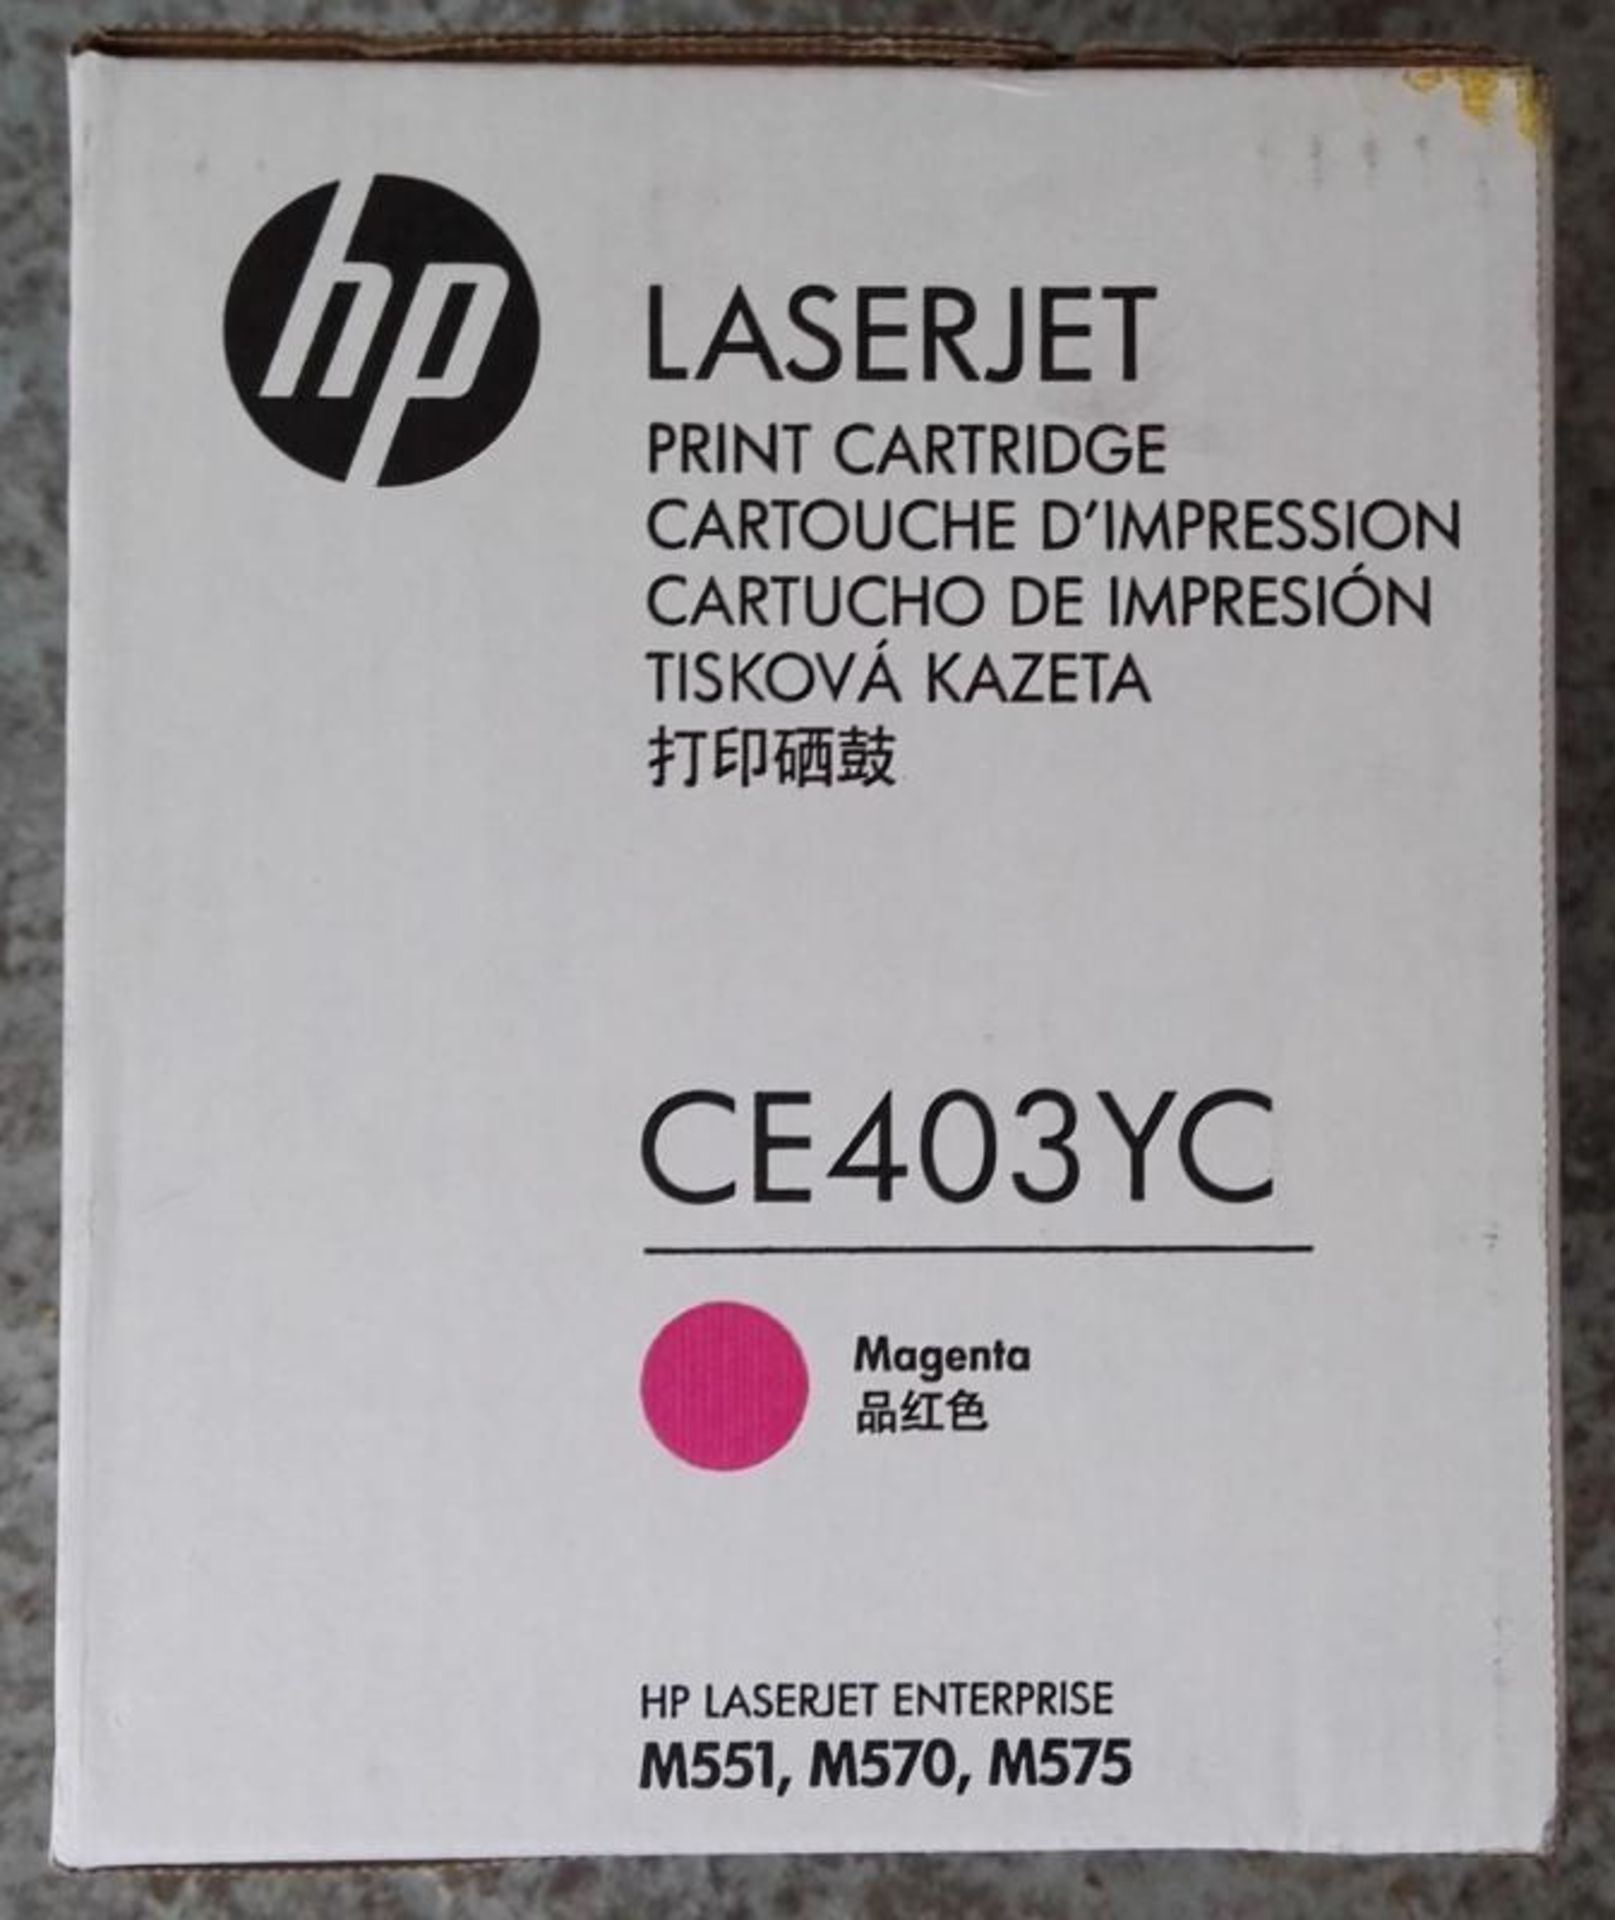 1 x HP 507Y High Capacity Magenta Original LaserJet Toner Cartridge (CE403YC) - New/Sealed/Unused - - Image 2 of 2